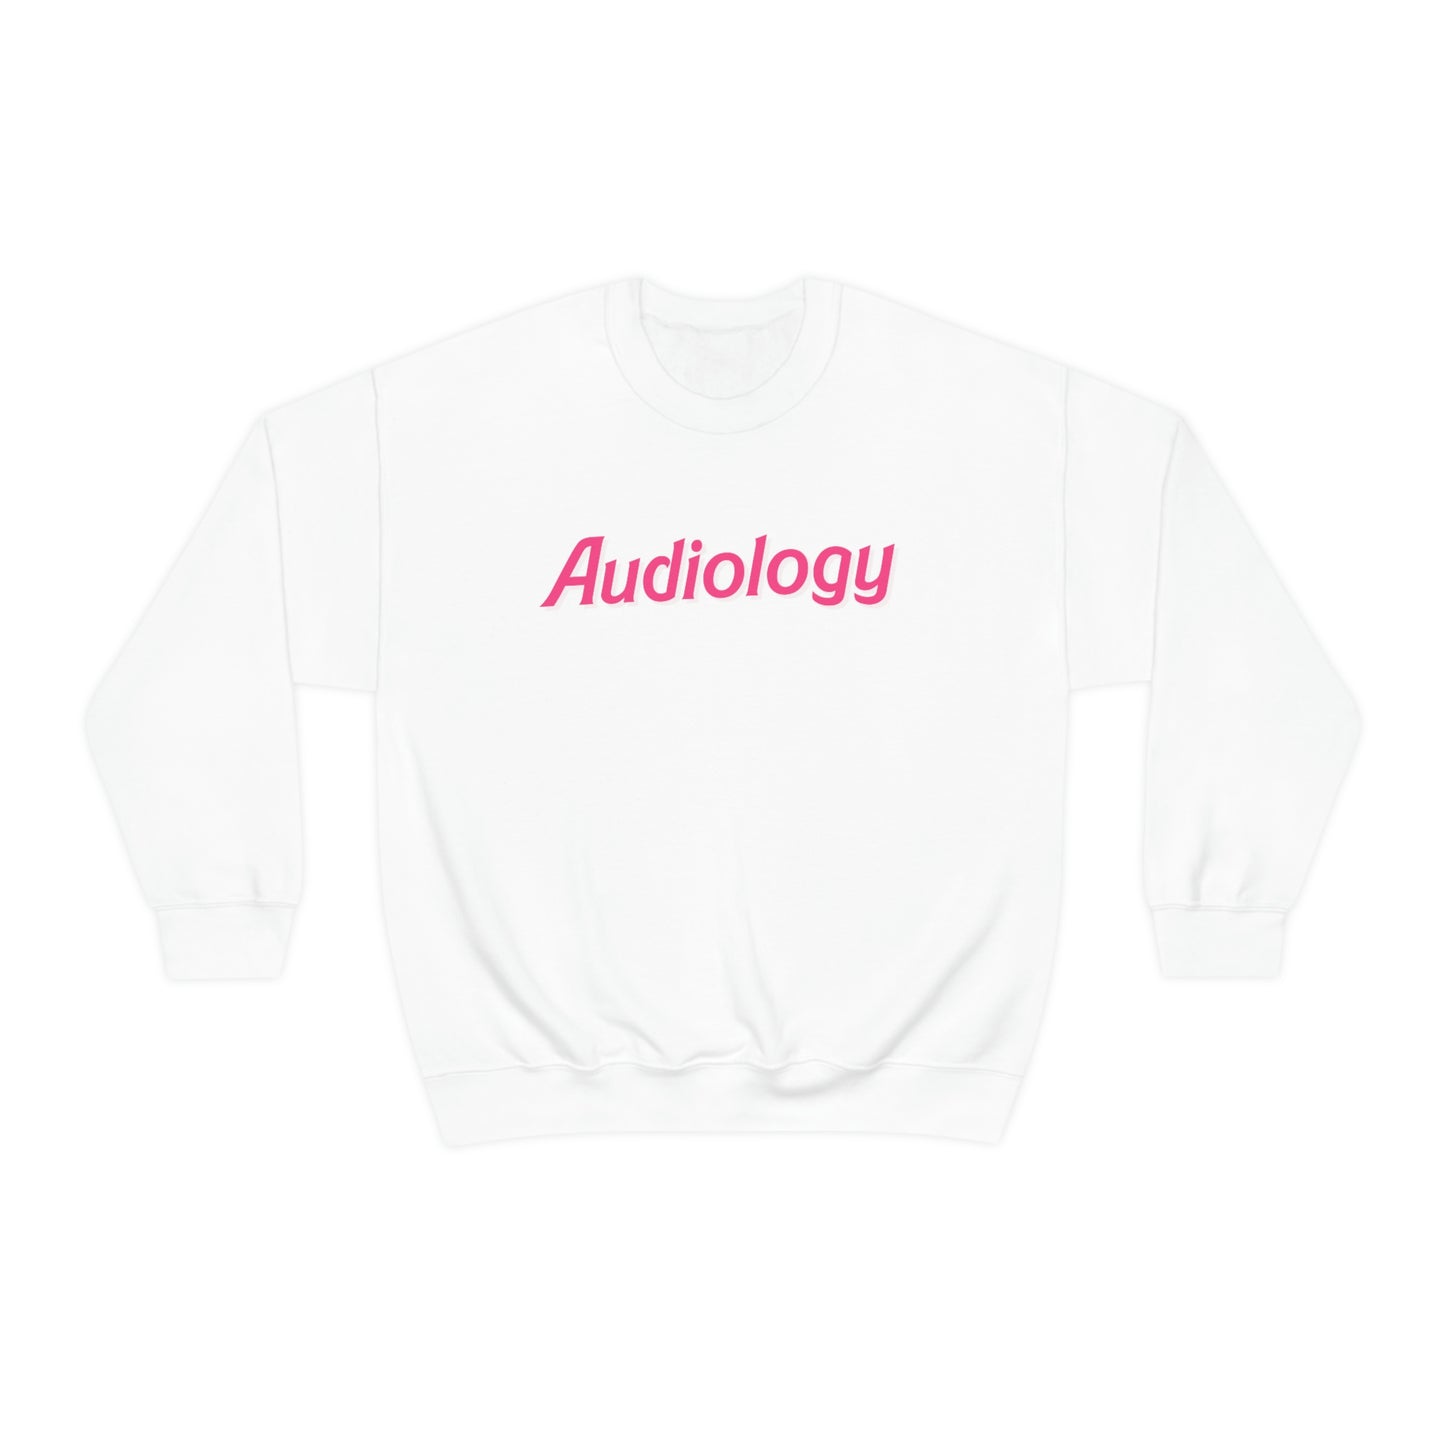 Audiology Crewneck Sweatshirt